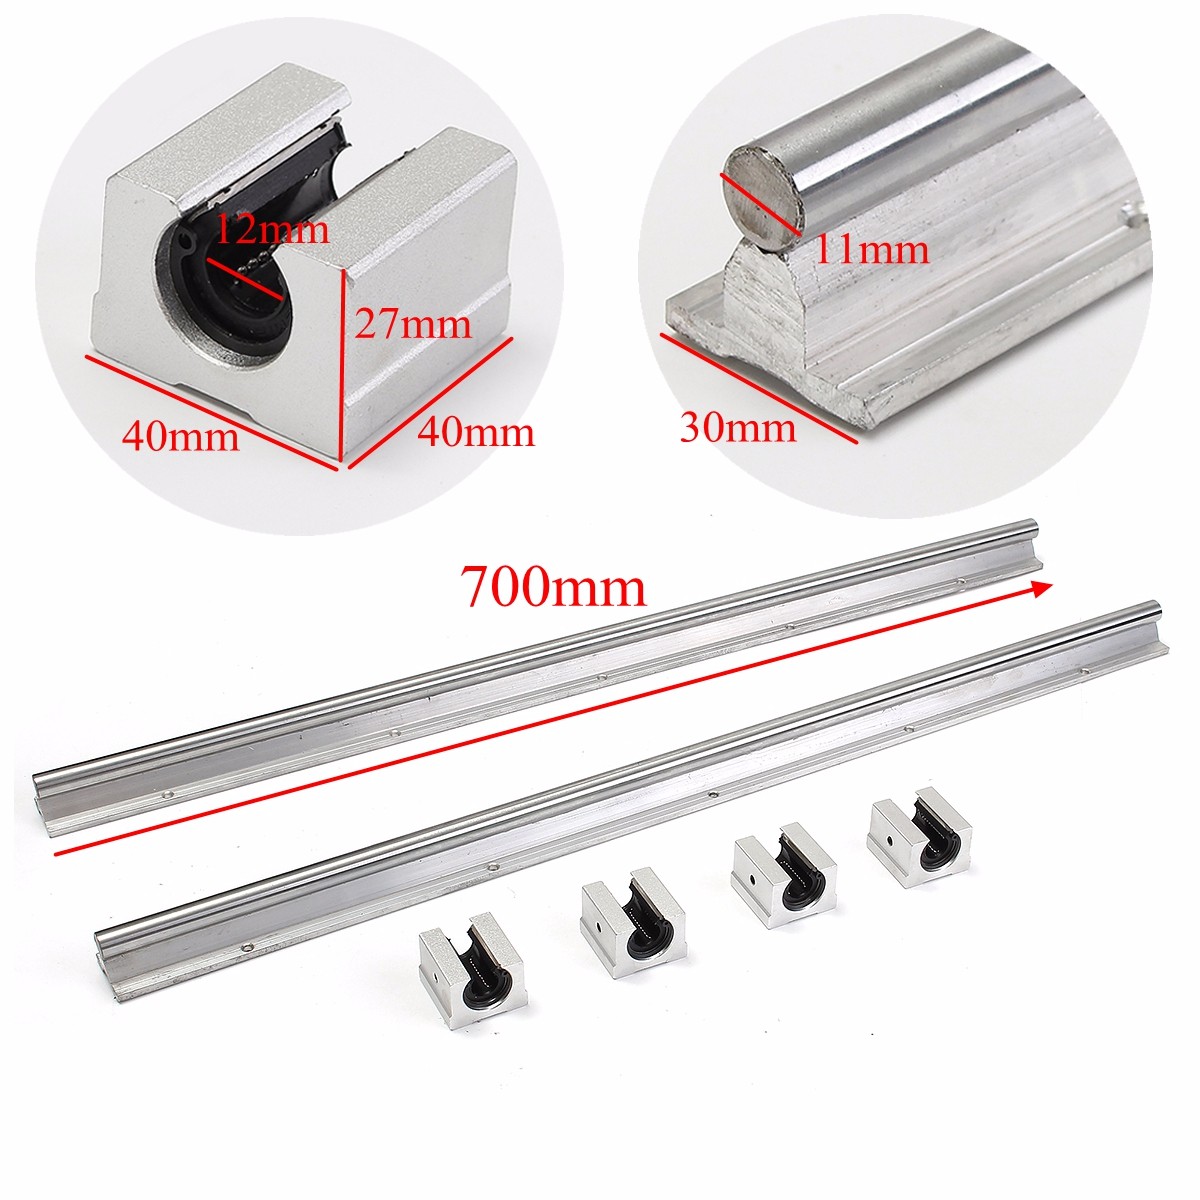 2Pcs SBR12-700mm Linear Bearing Slide Rails Linear Guide + 4Pcs SBR12UU Blocks For 3D Printer CNC 7